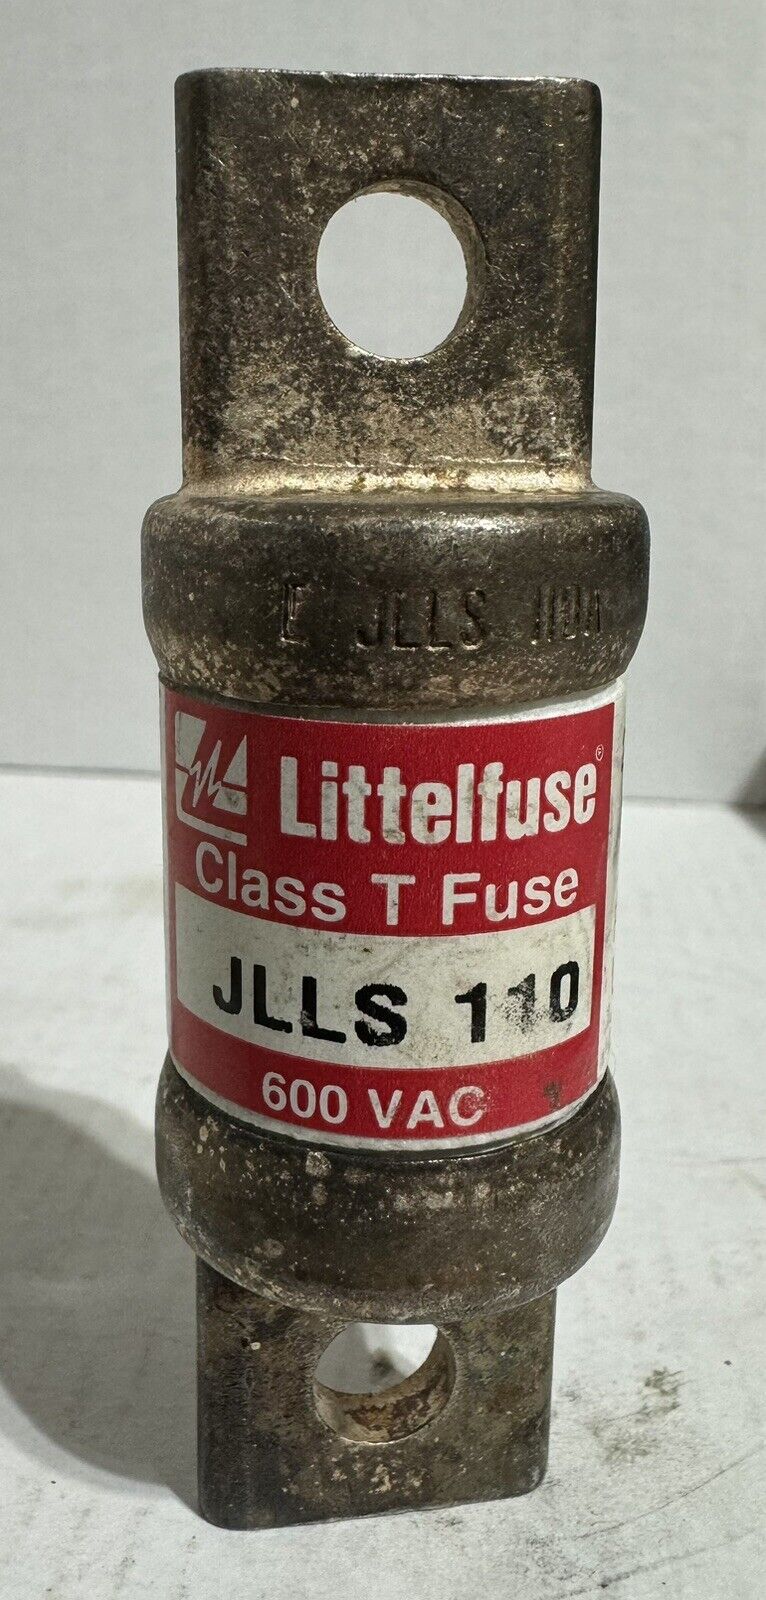 Littlefuse JLLS 110A Class T Fuse - 110 amps / 600 volts